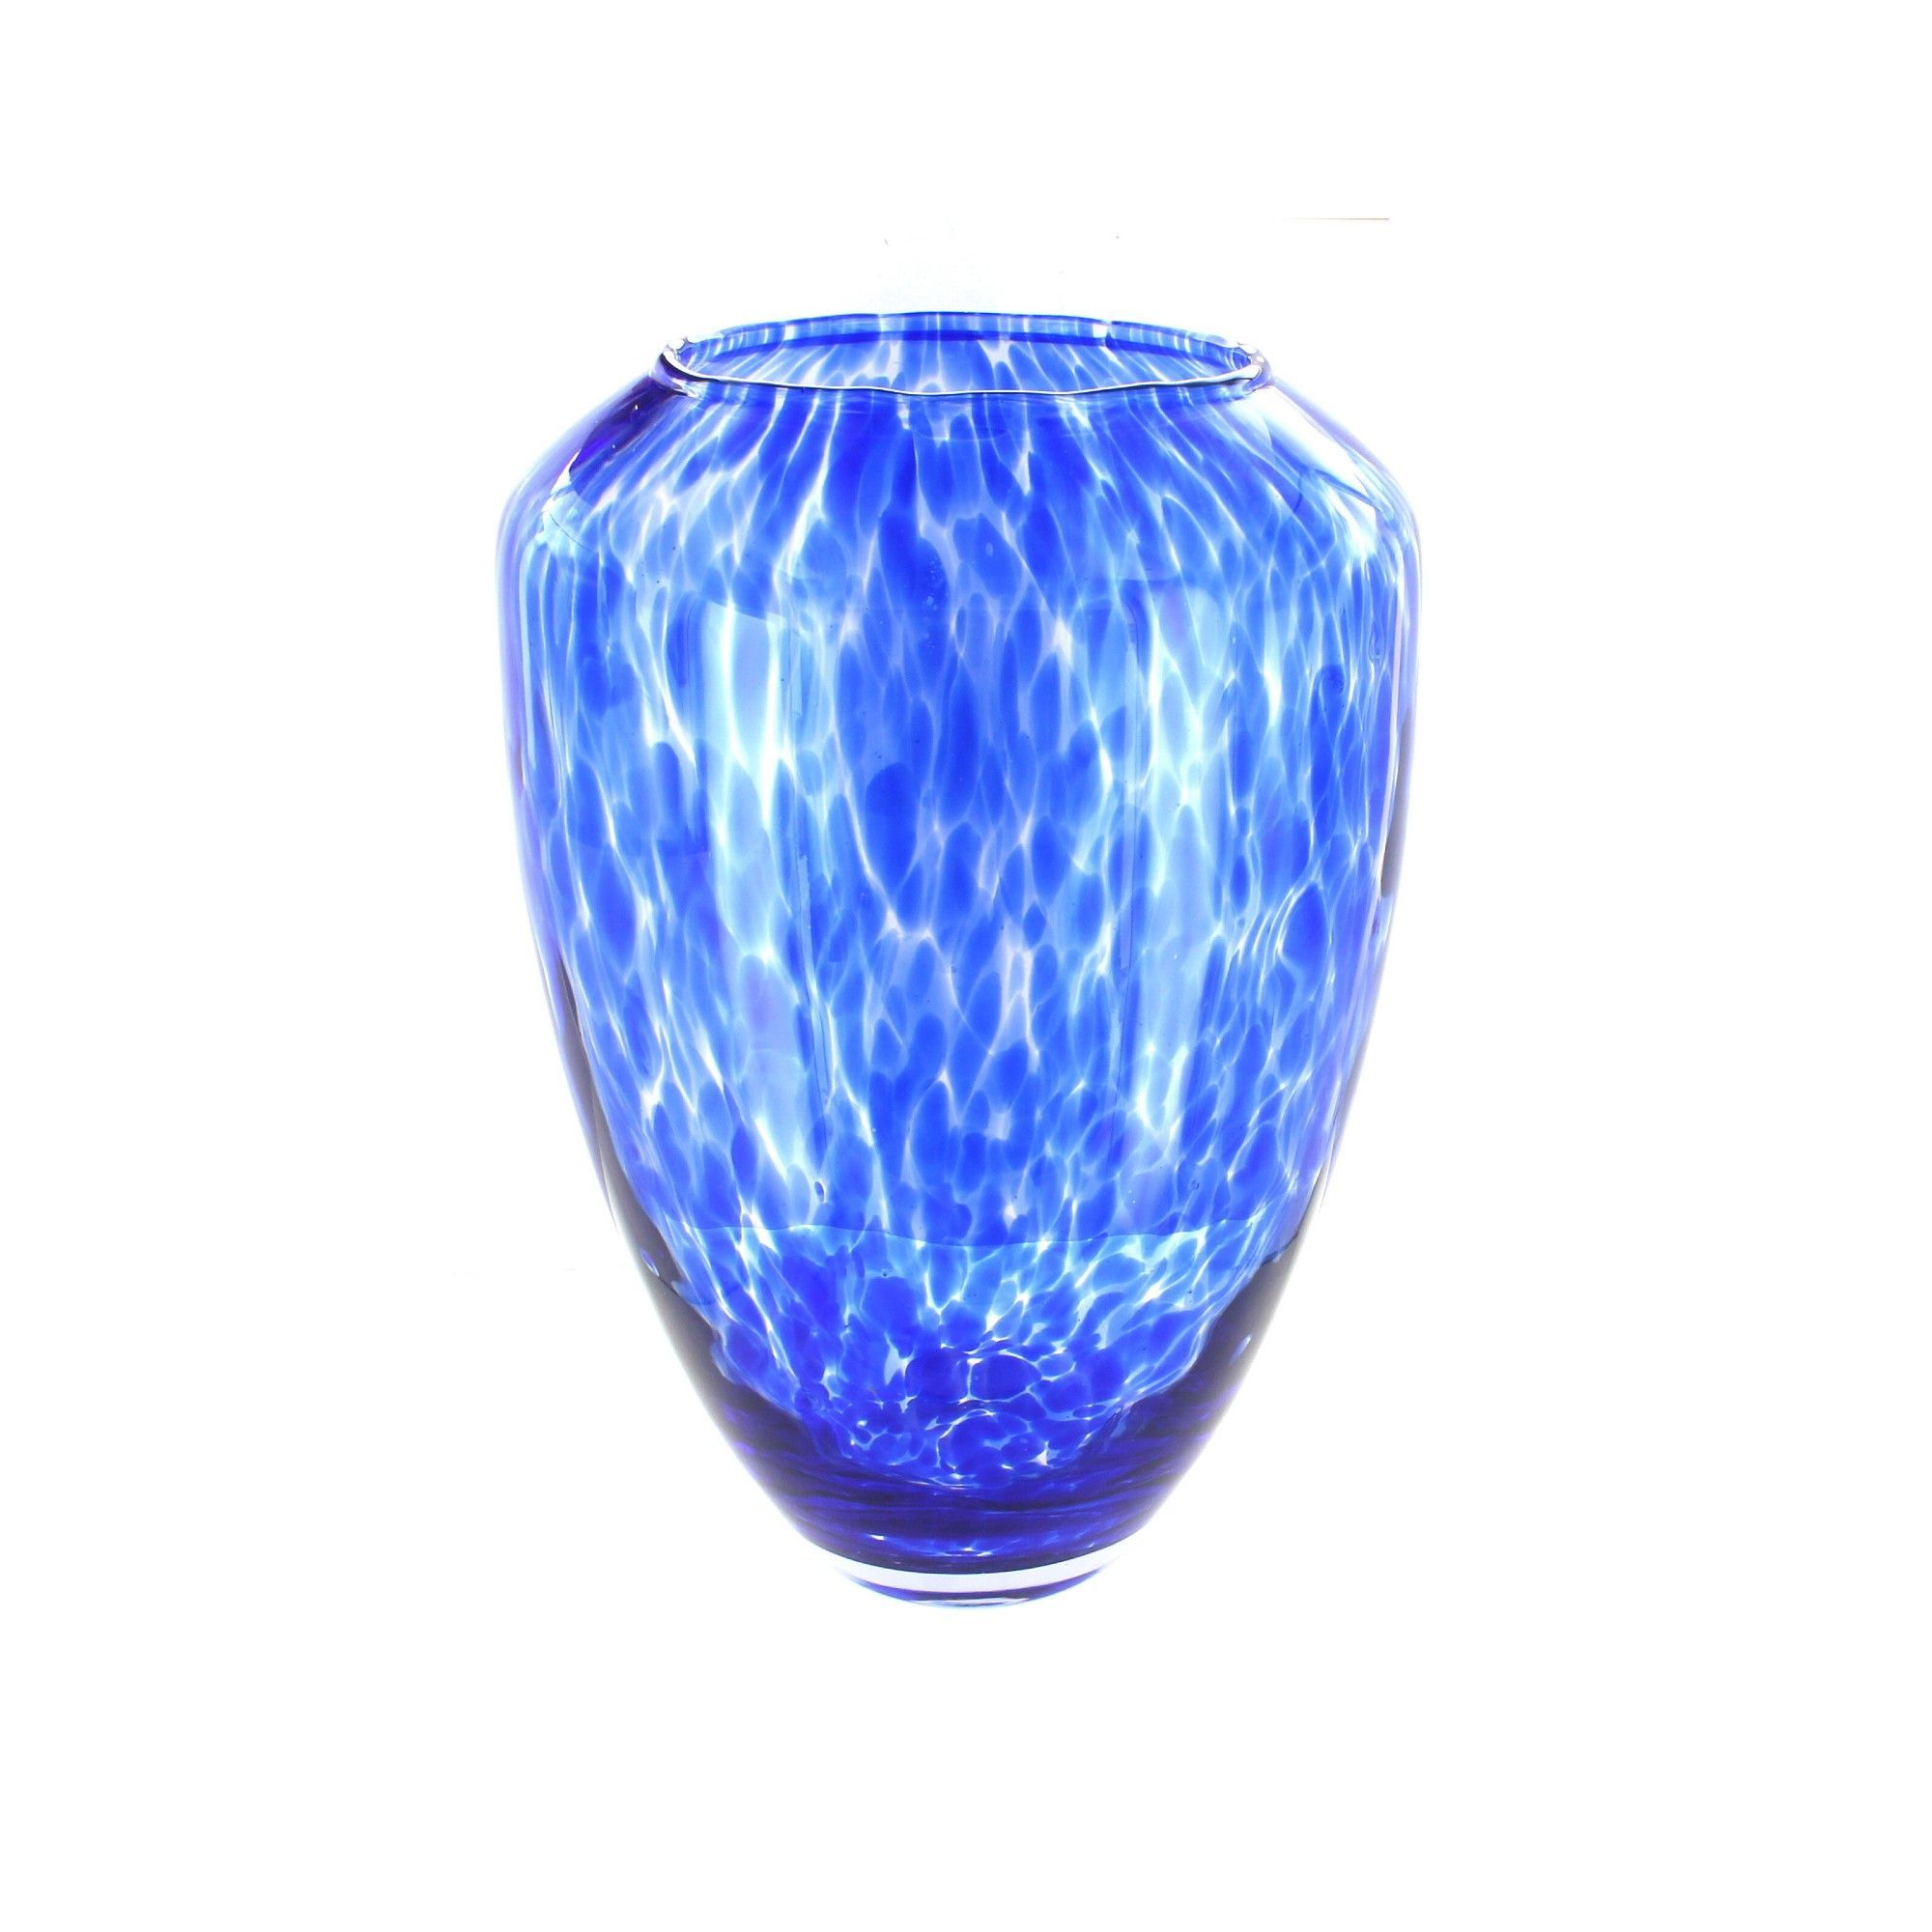 A Centerpiece Vase